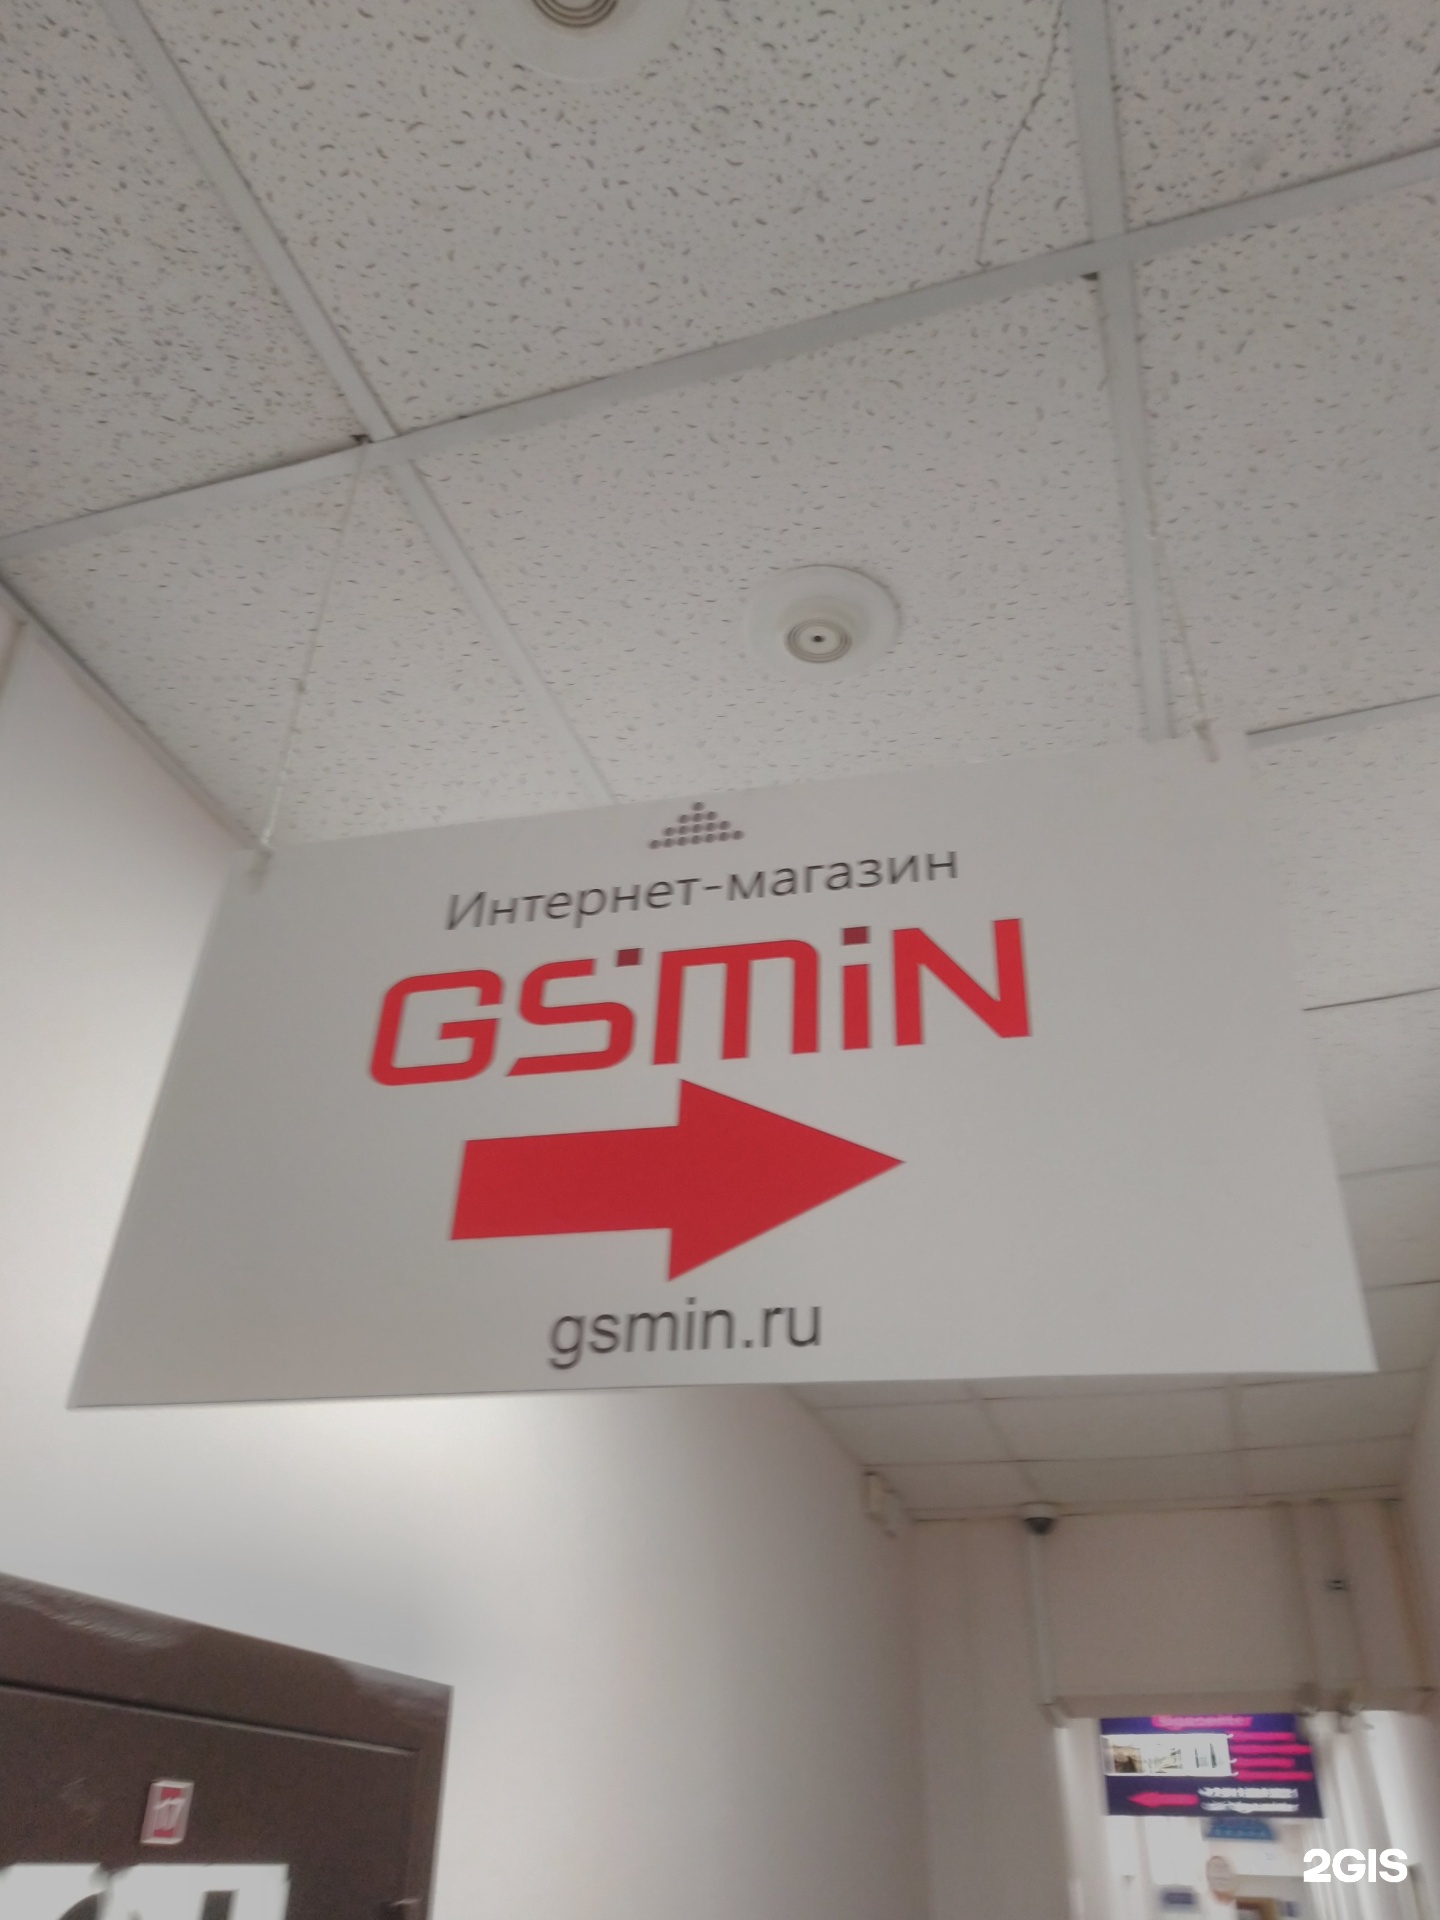 Gsmin Ru Интернет Магазин